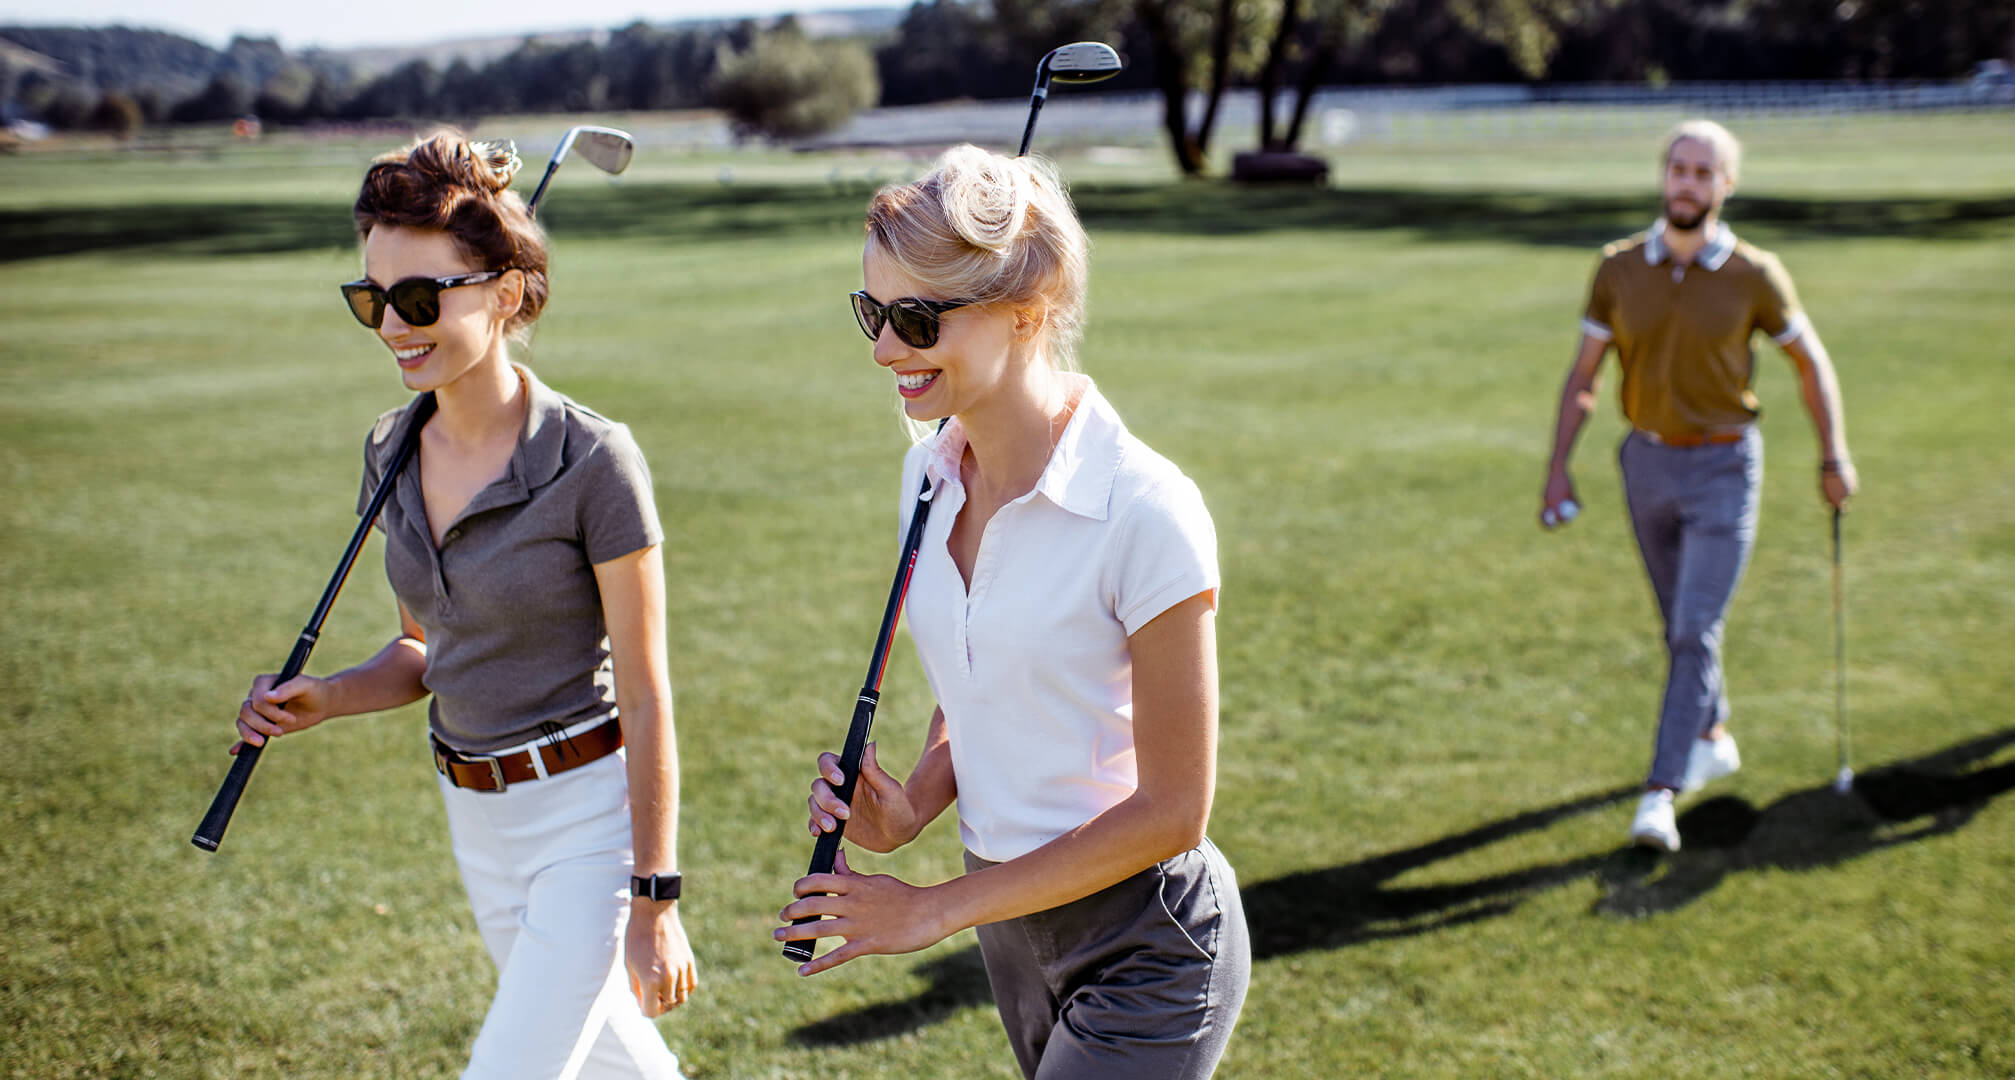 https://www.lentiamo.es/images/upload/golf-sunglasses-women.jpeg